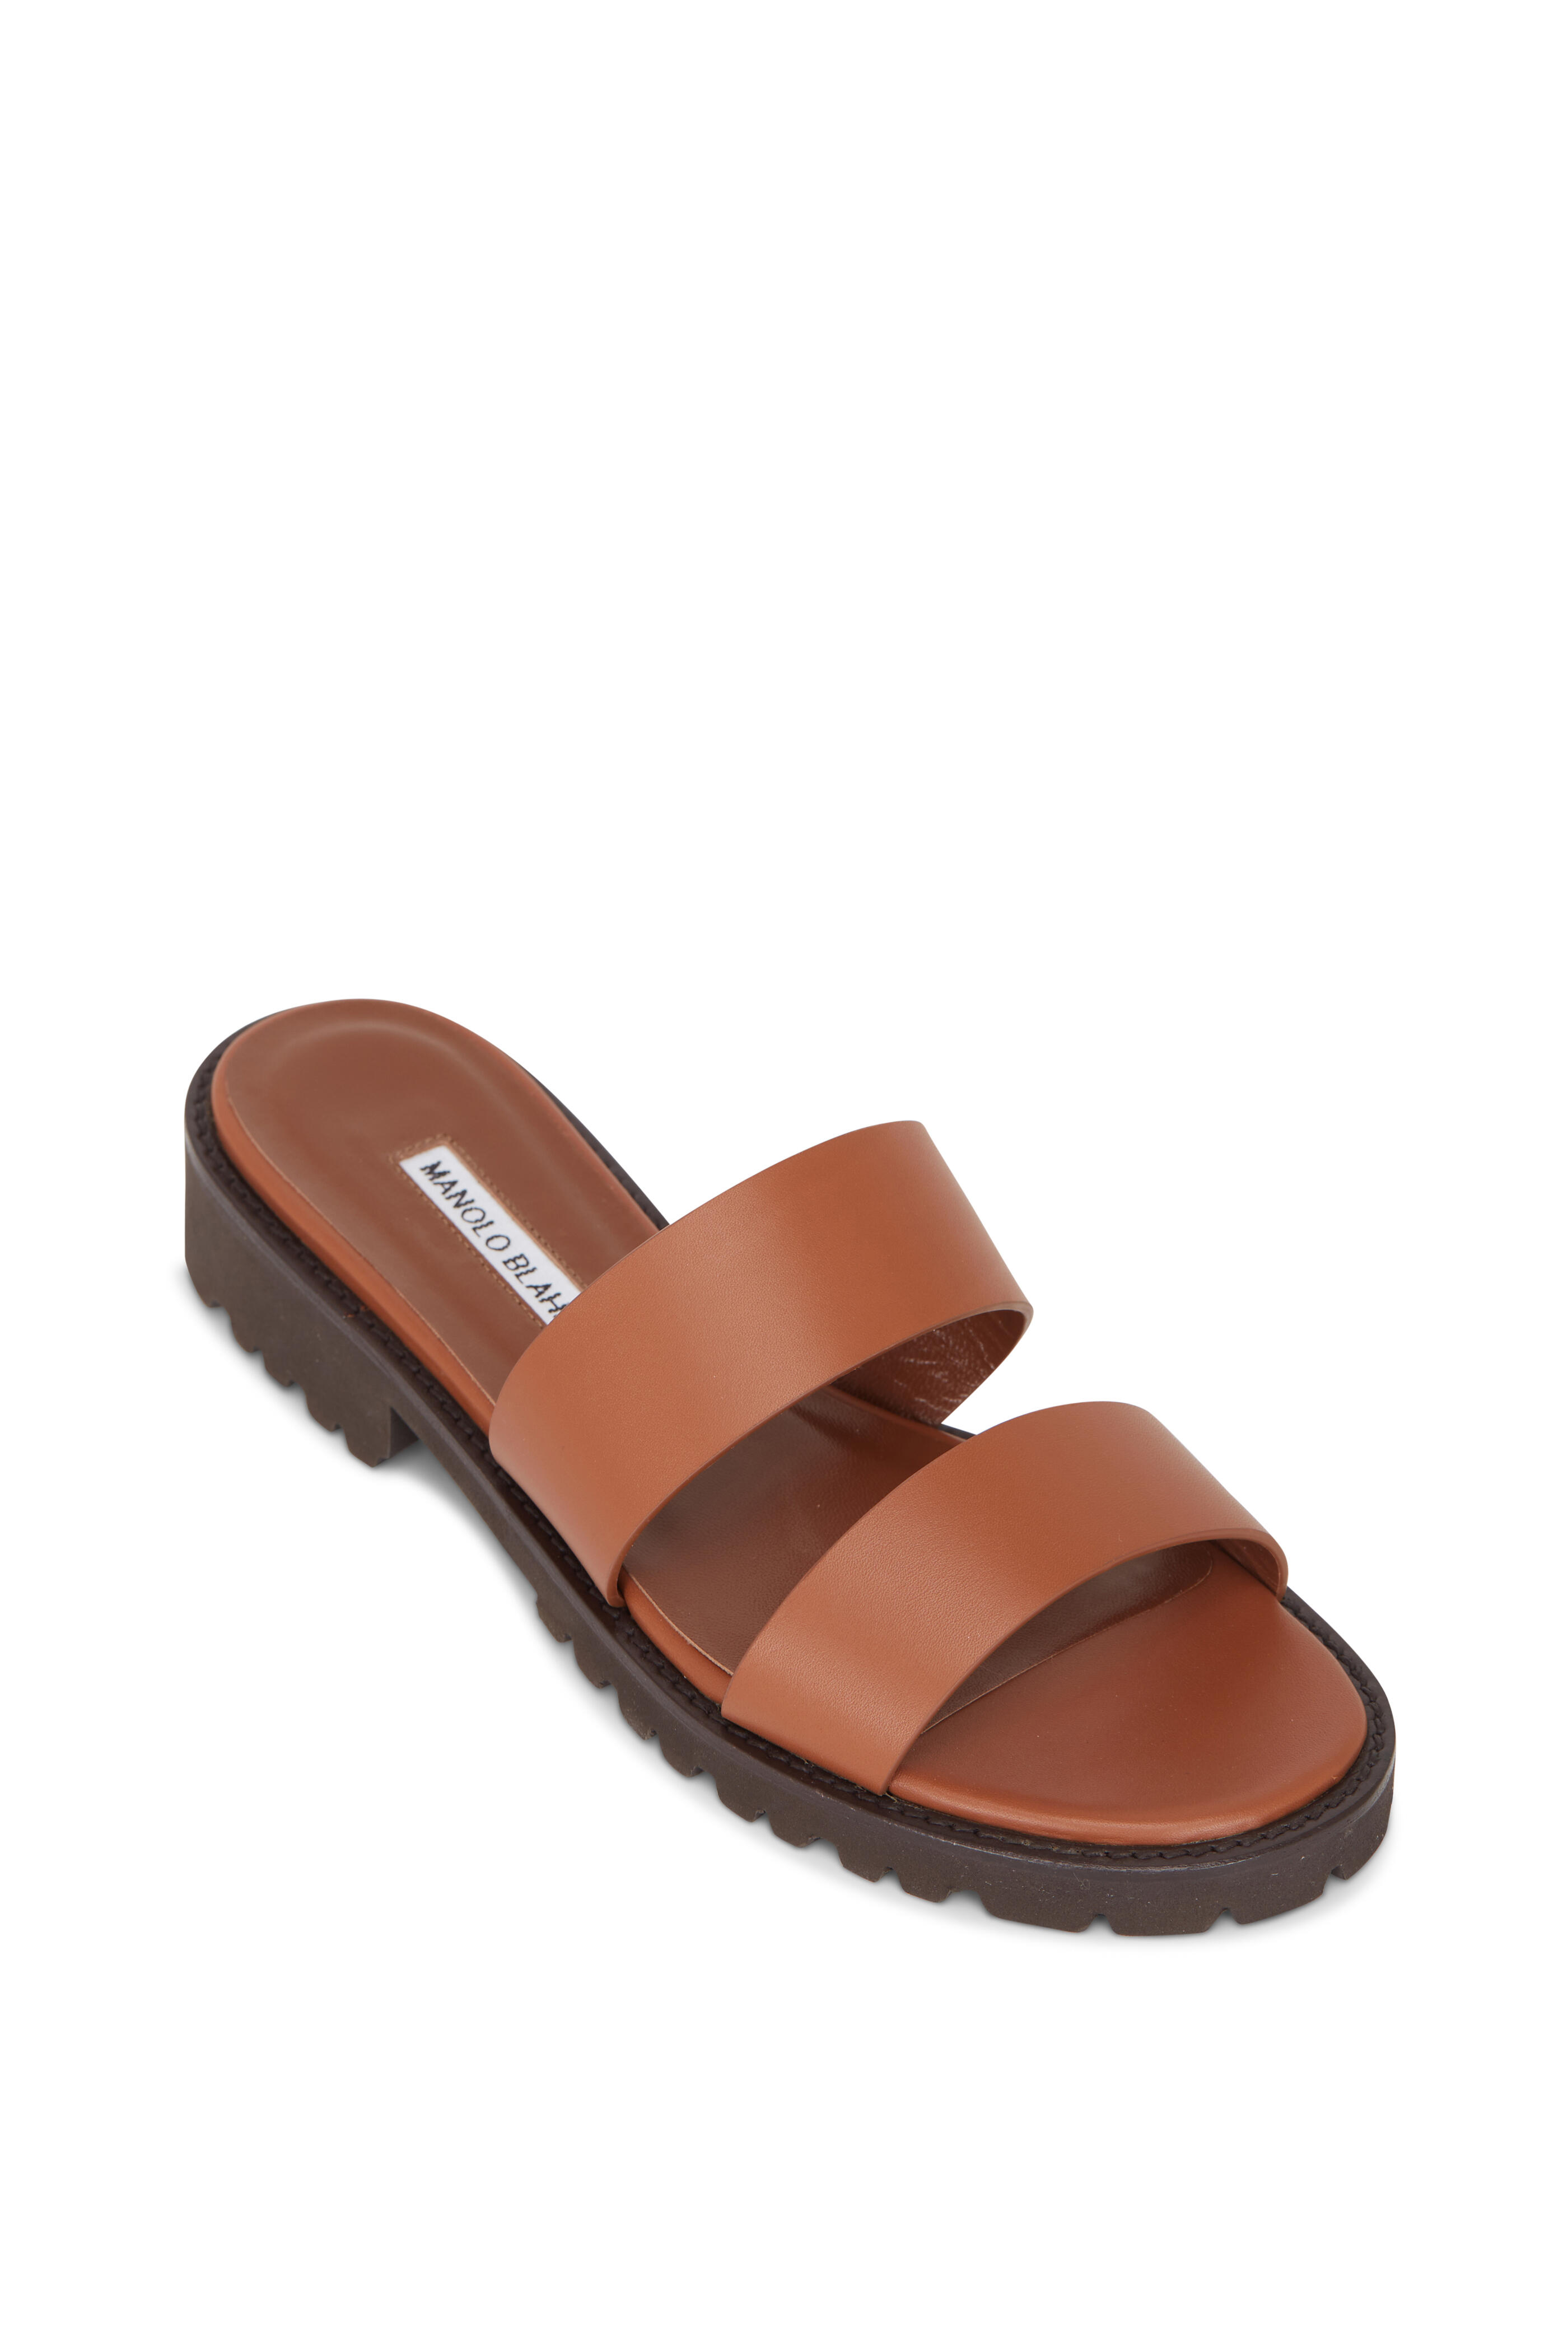 Manolo Blahnik - Gadmu Luggage Leather Lug Sole Flat Sandal